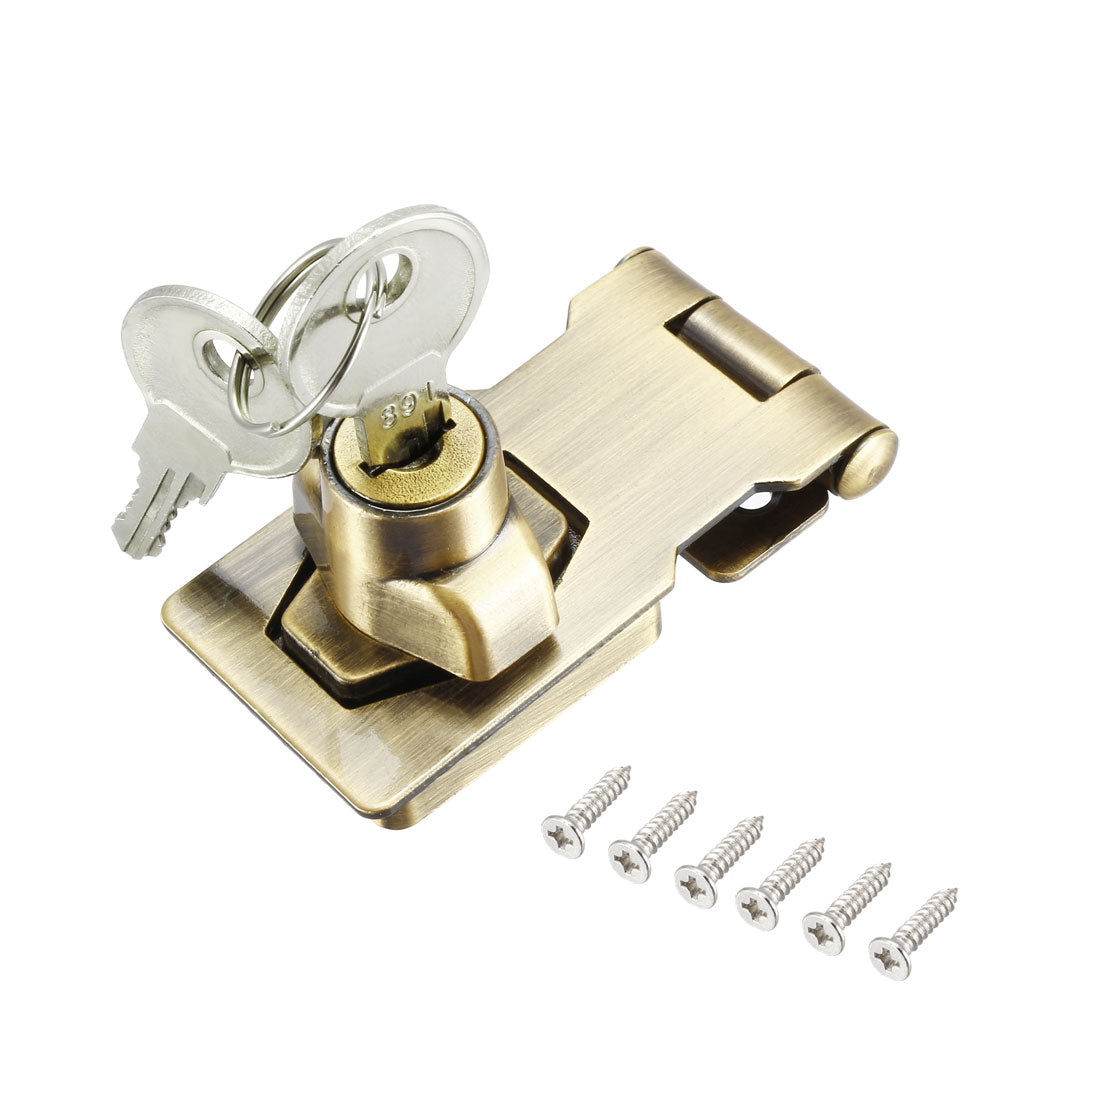 uxcell Uxcell Keyed Hasp Lock 80mm Twist Knob Keyed Locking Hasp for Door Cabinet Keyed Different Bronze Tone